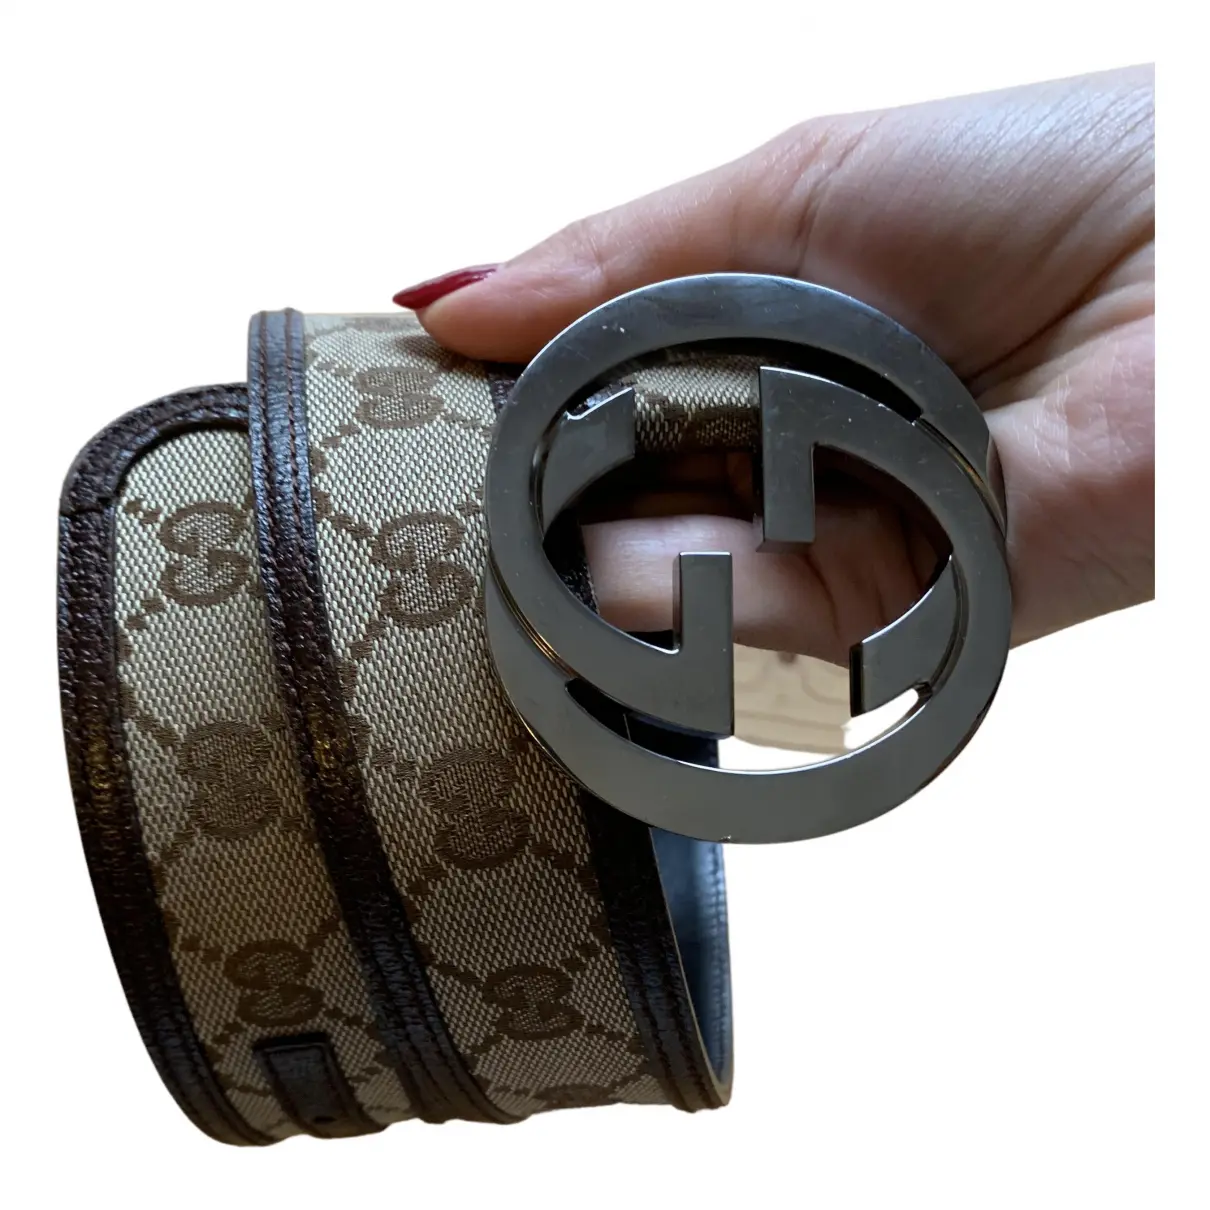 Buy Gucci Interlocking Buckle cloth belt online